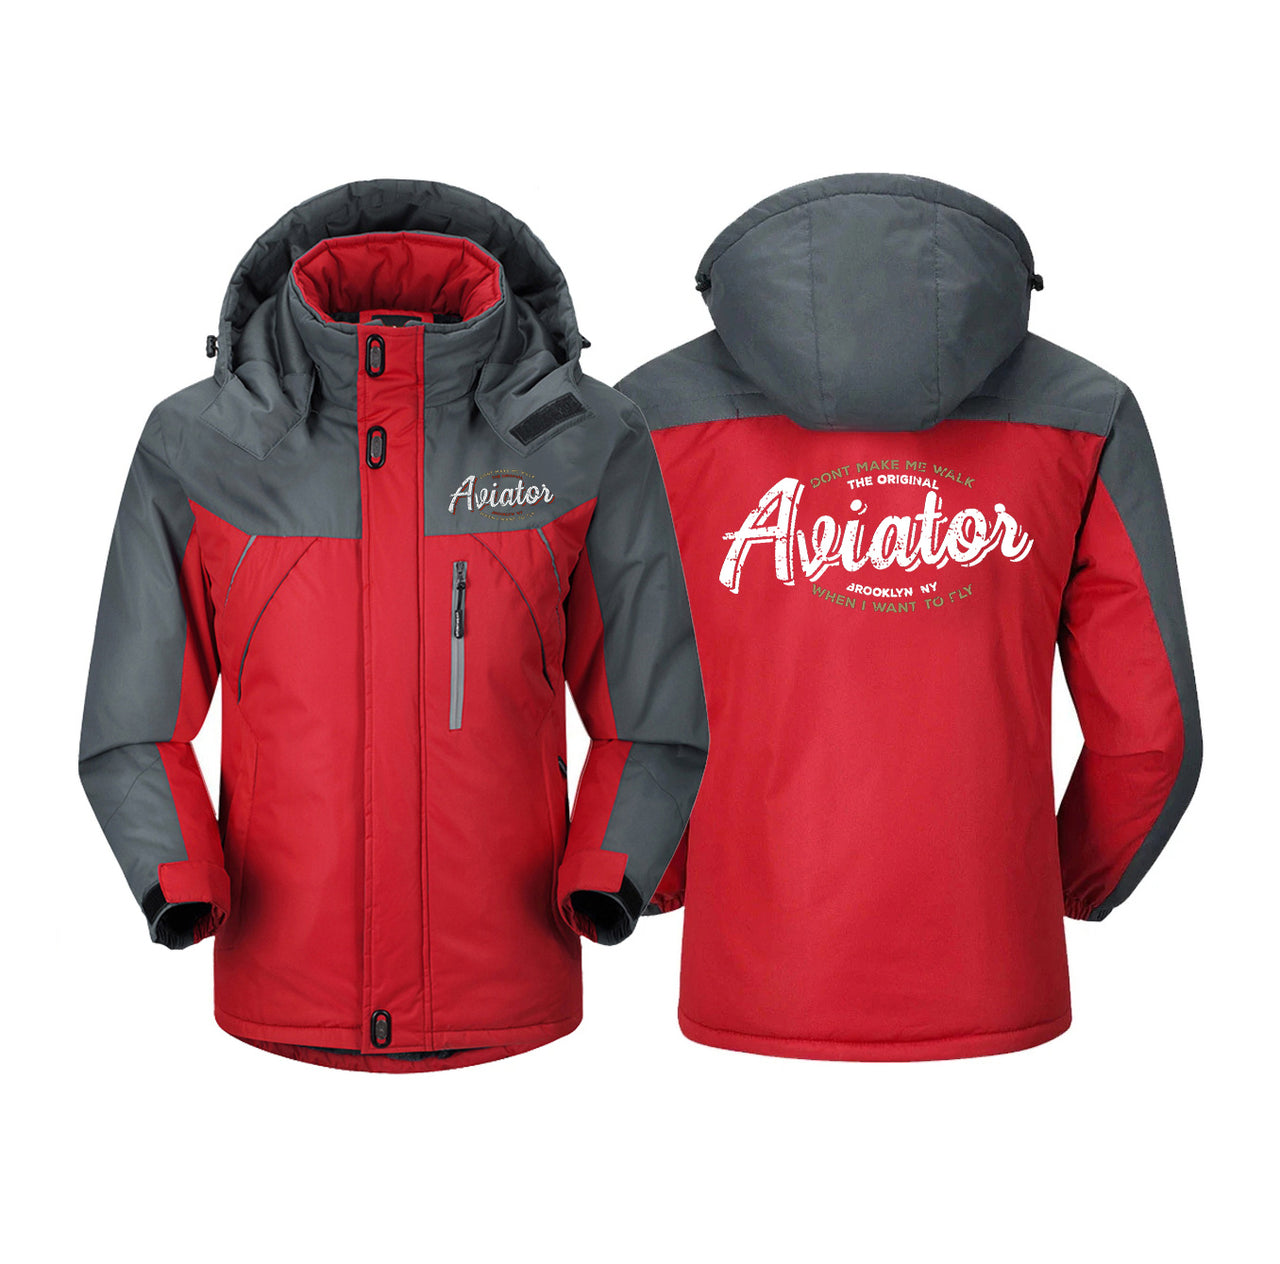 Aviator - Dont Make Me Walk Designed Thick Winter Jackets